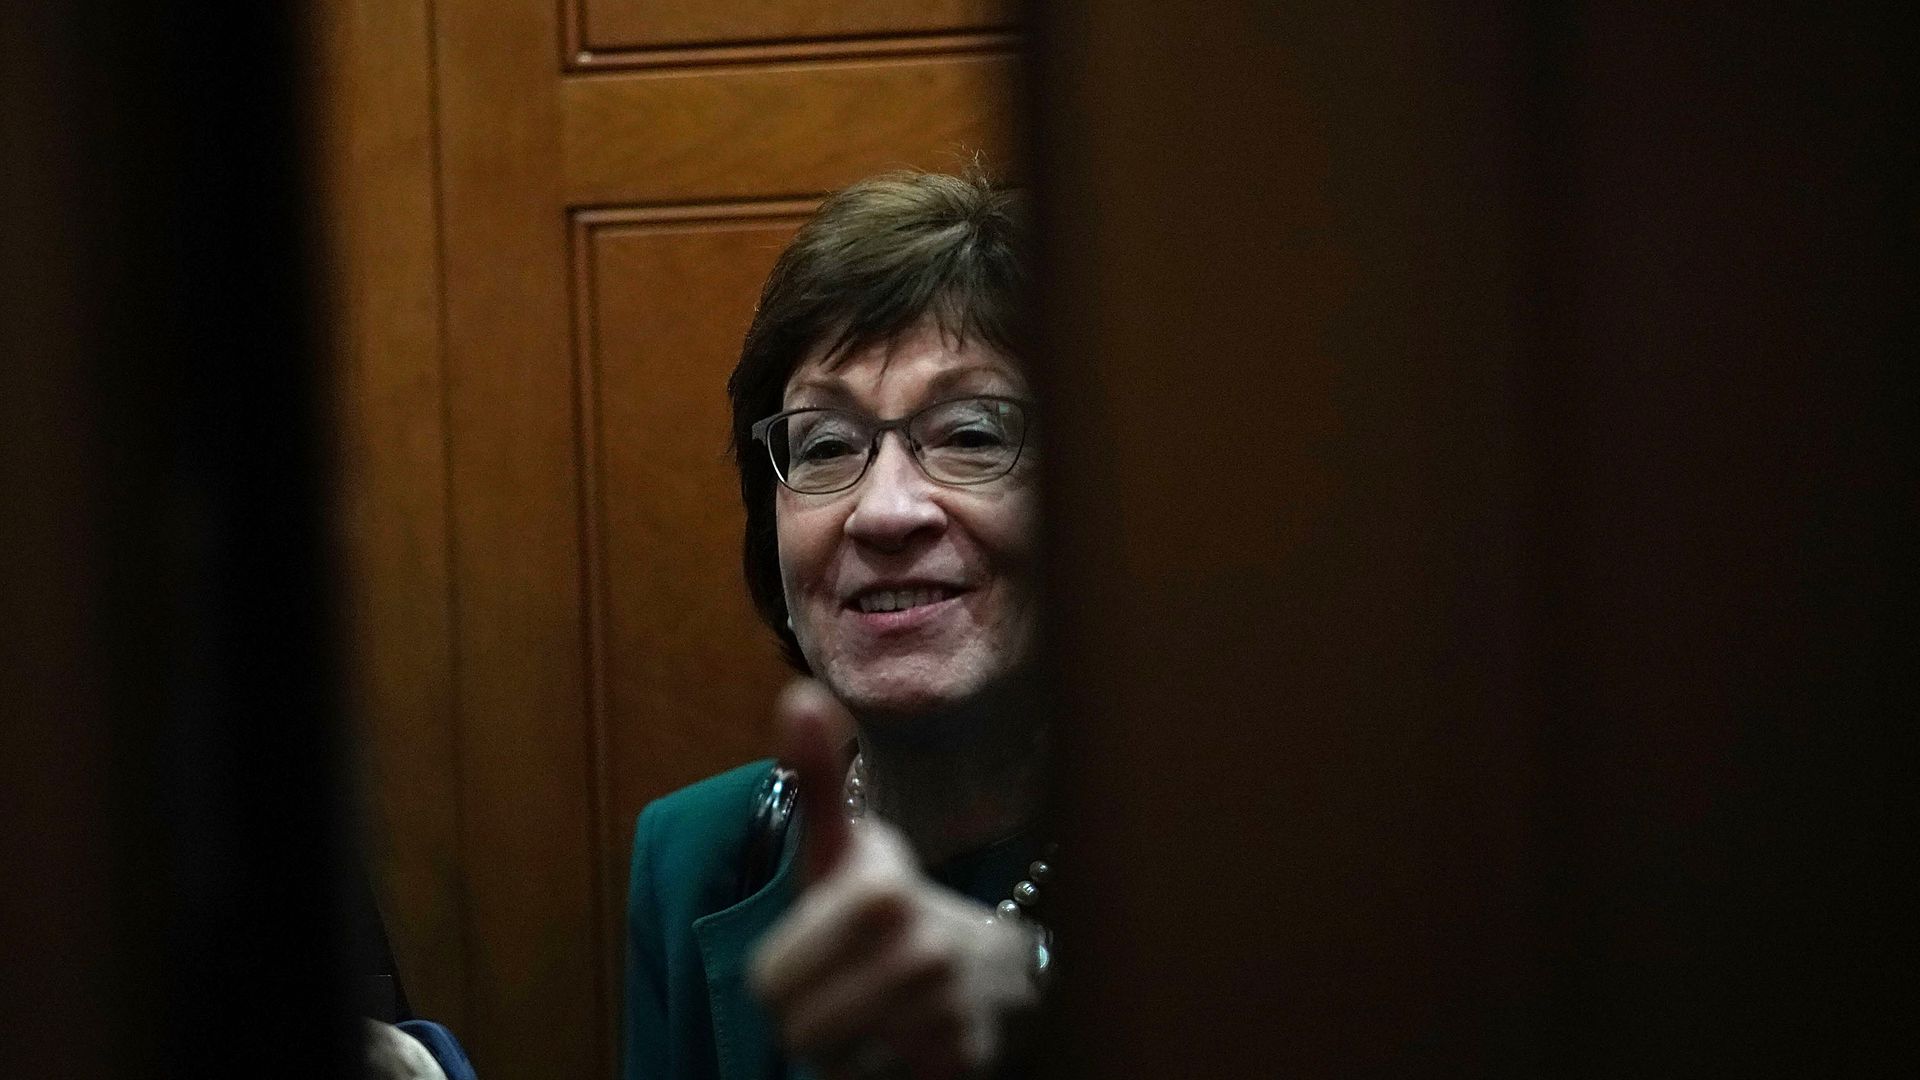 Senator Susan Collins offers a thumbs up